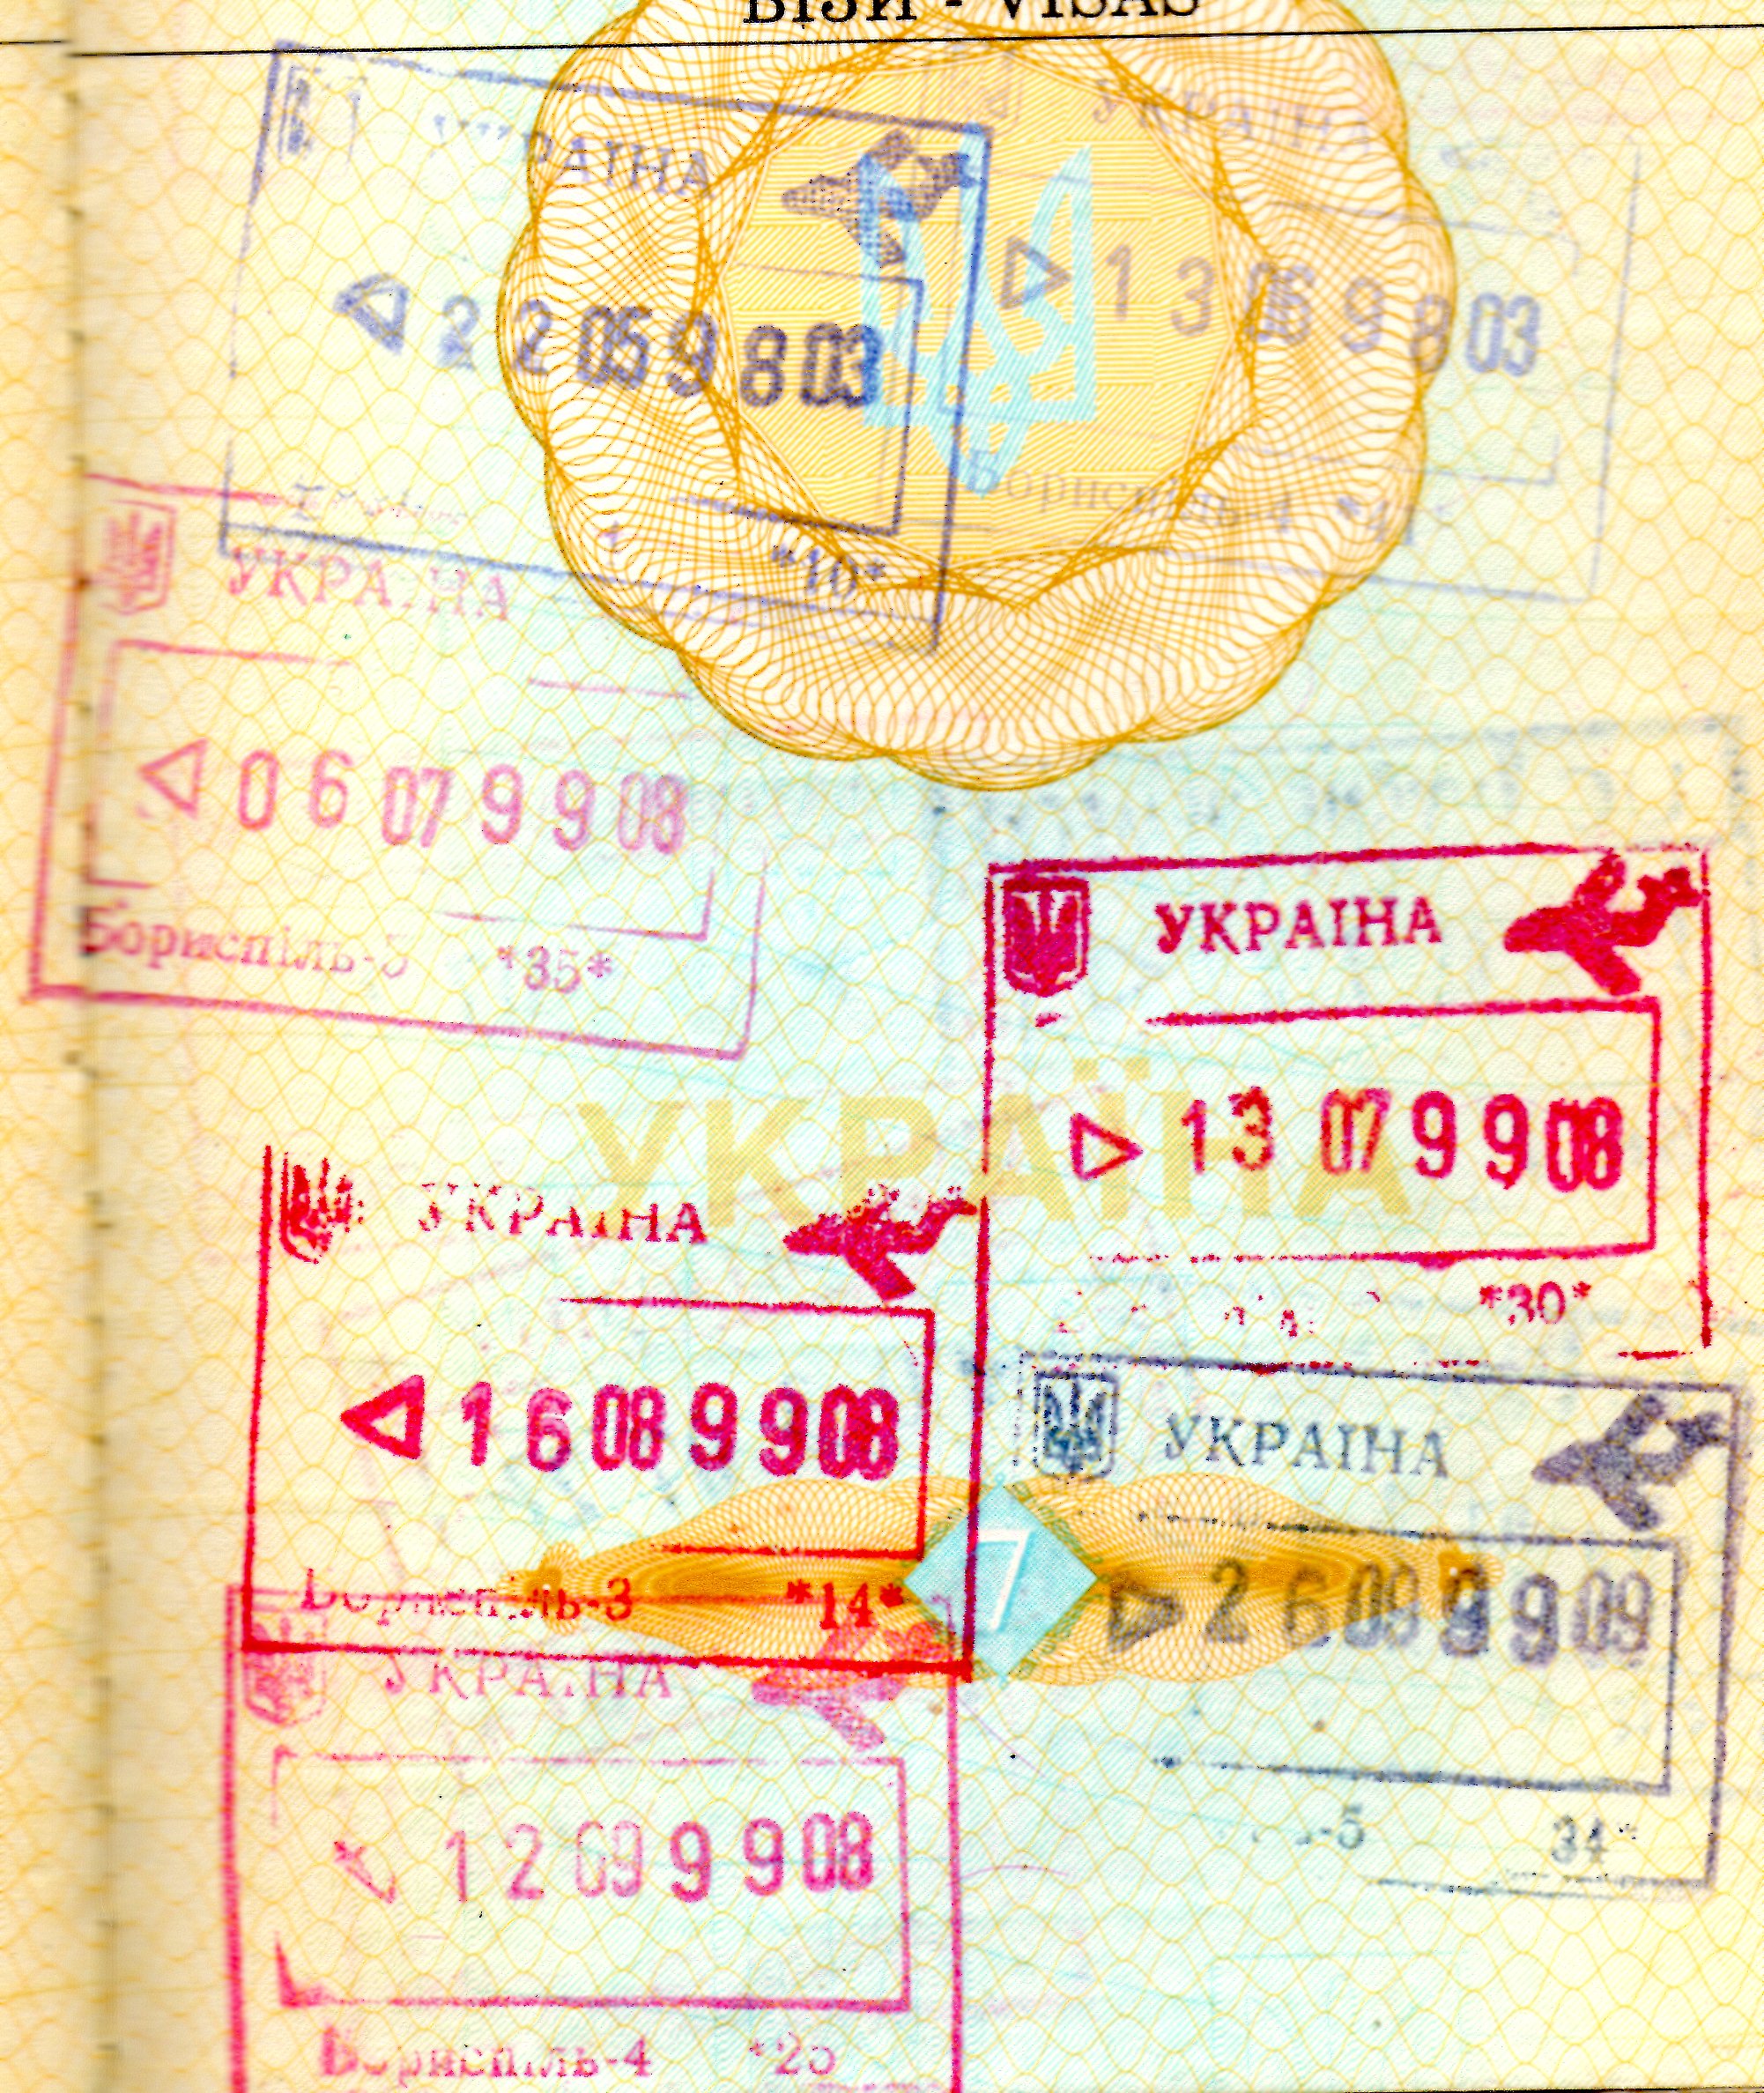 Boryspil airport border stamps (1998-1999)